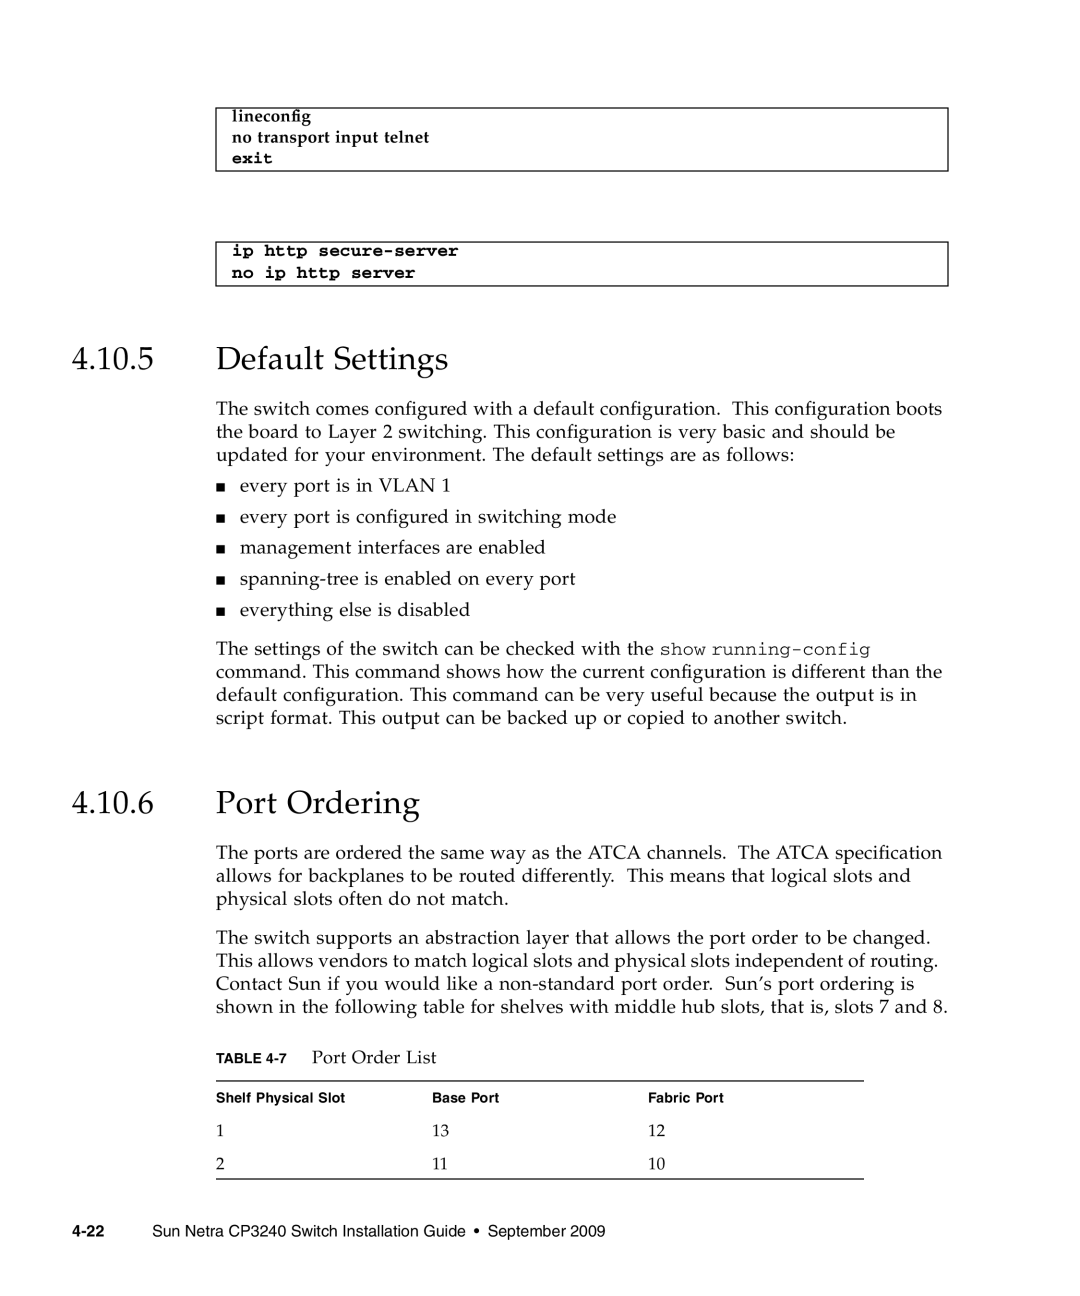 Sun Microsystems CP3240 manual Default Settings, Port Ordering 